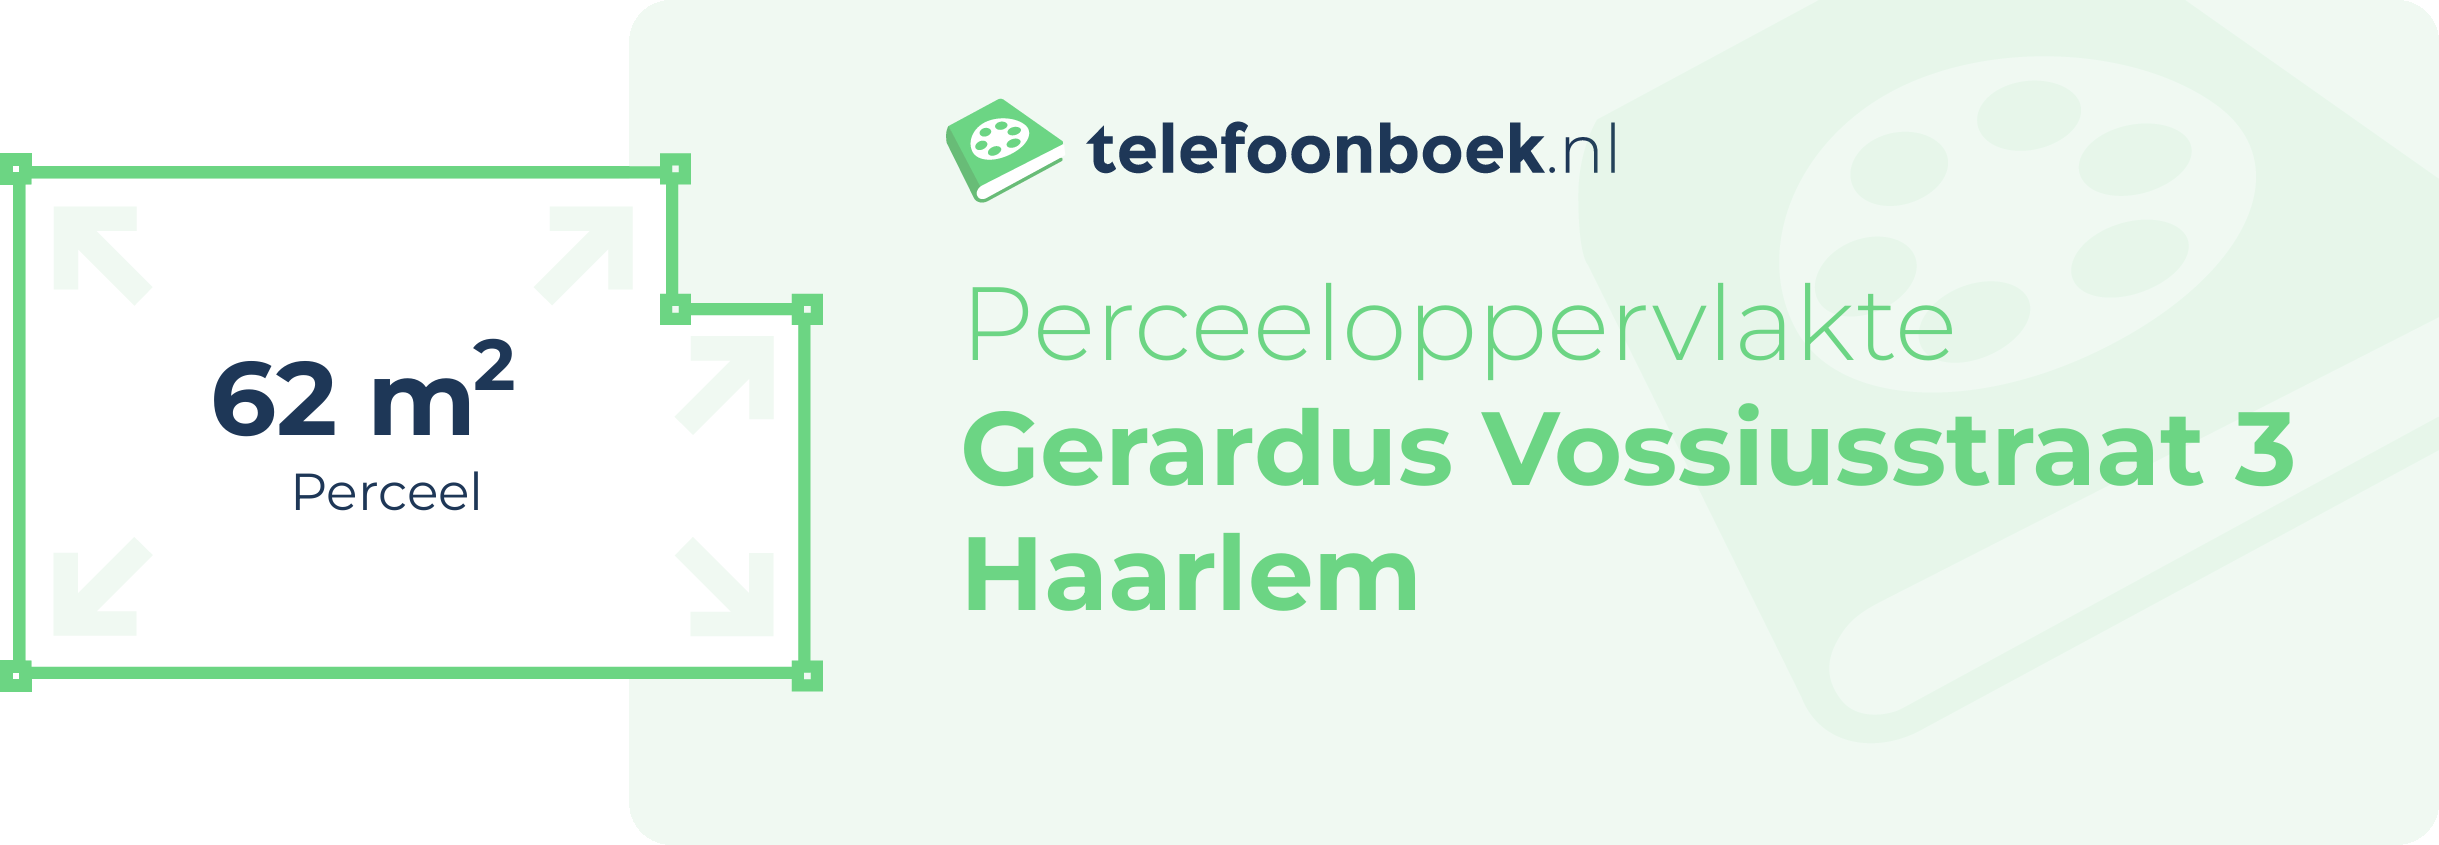 Perceeloppervlakte Gerardus Vossiusstraat 3 Haarlem